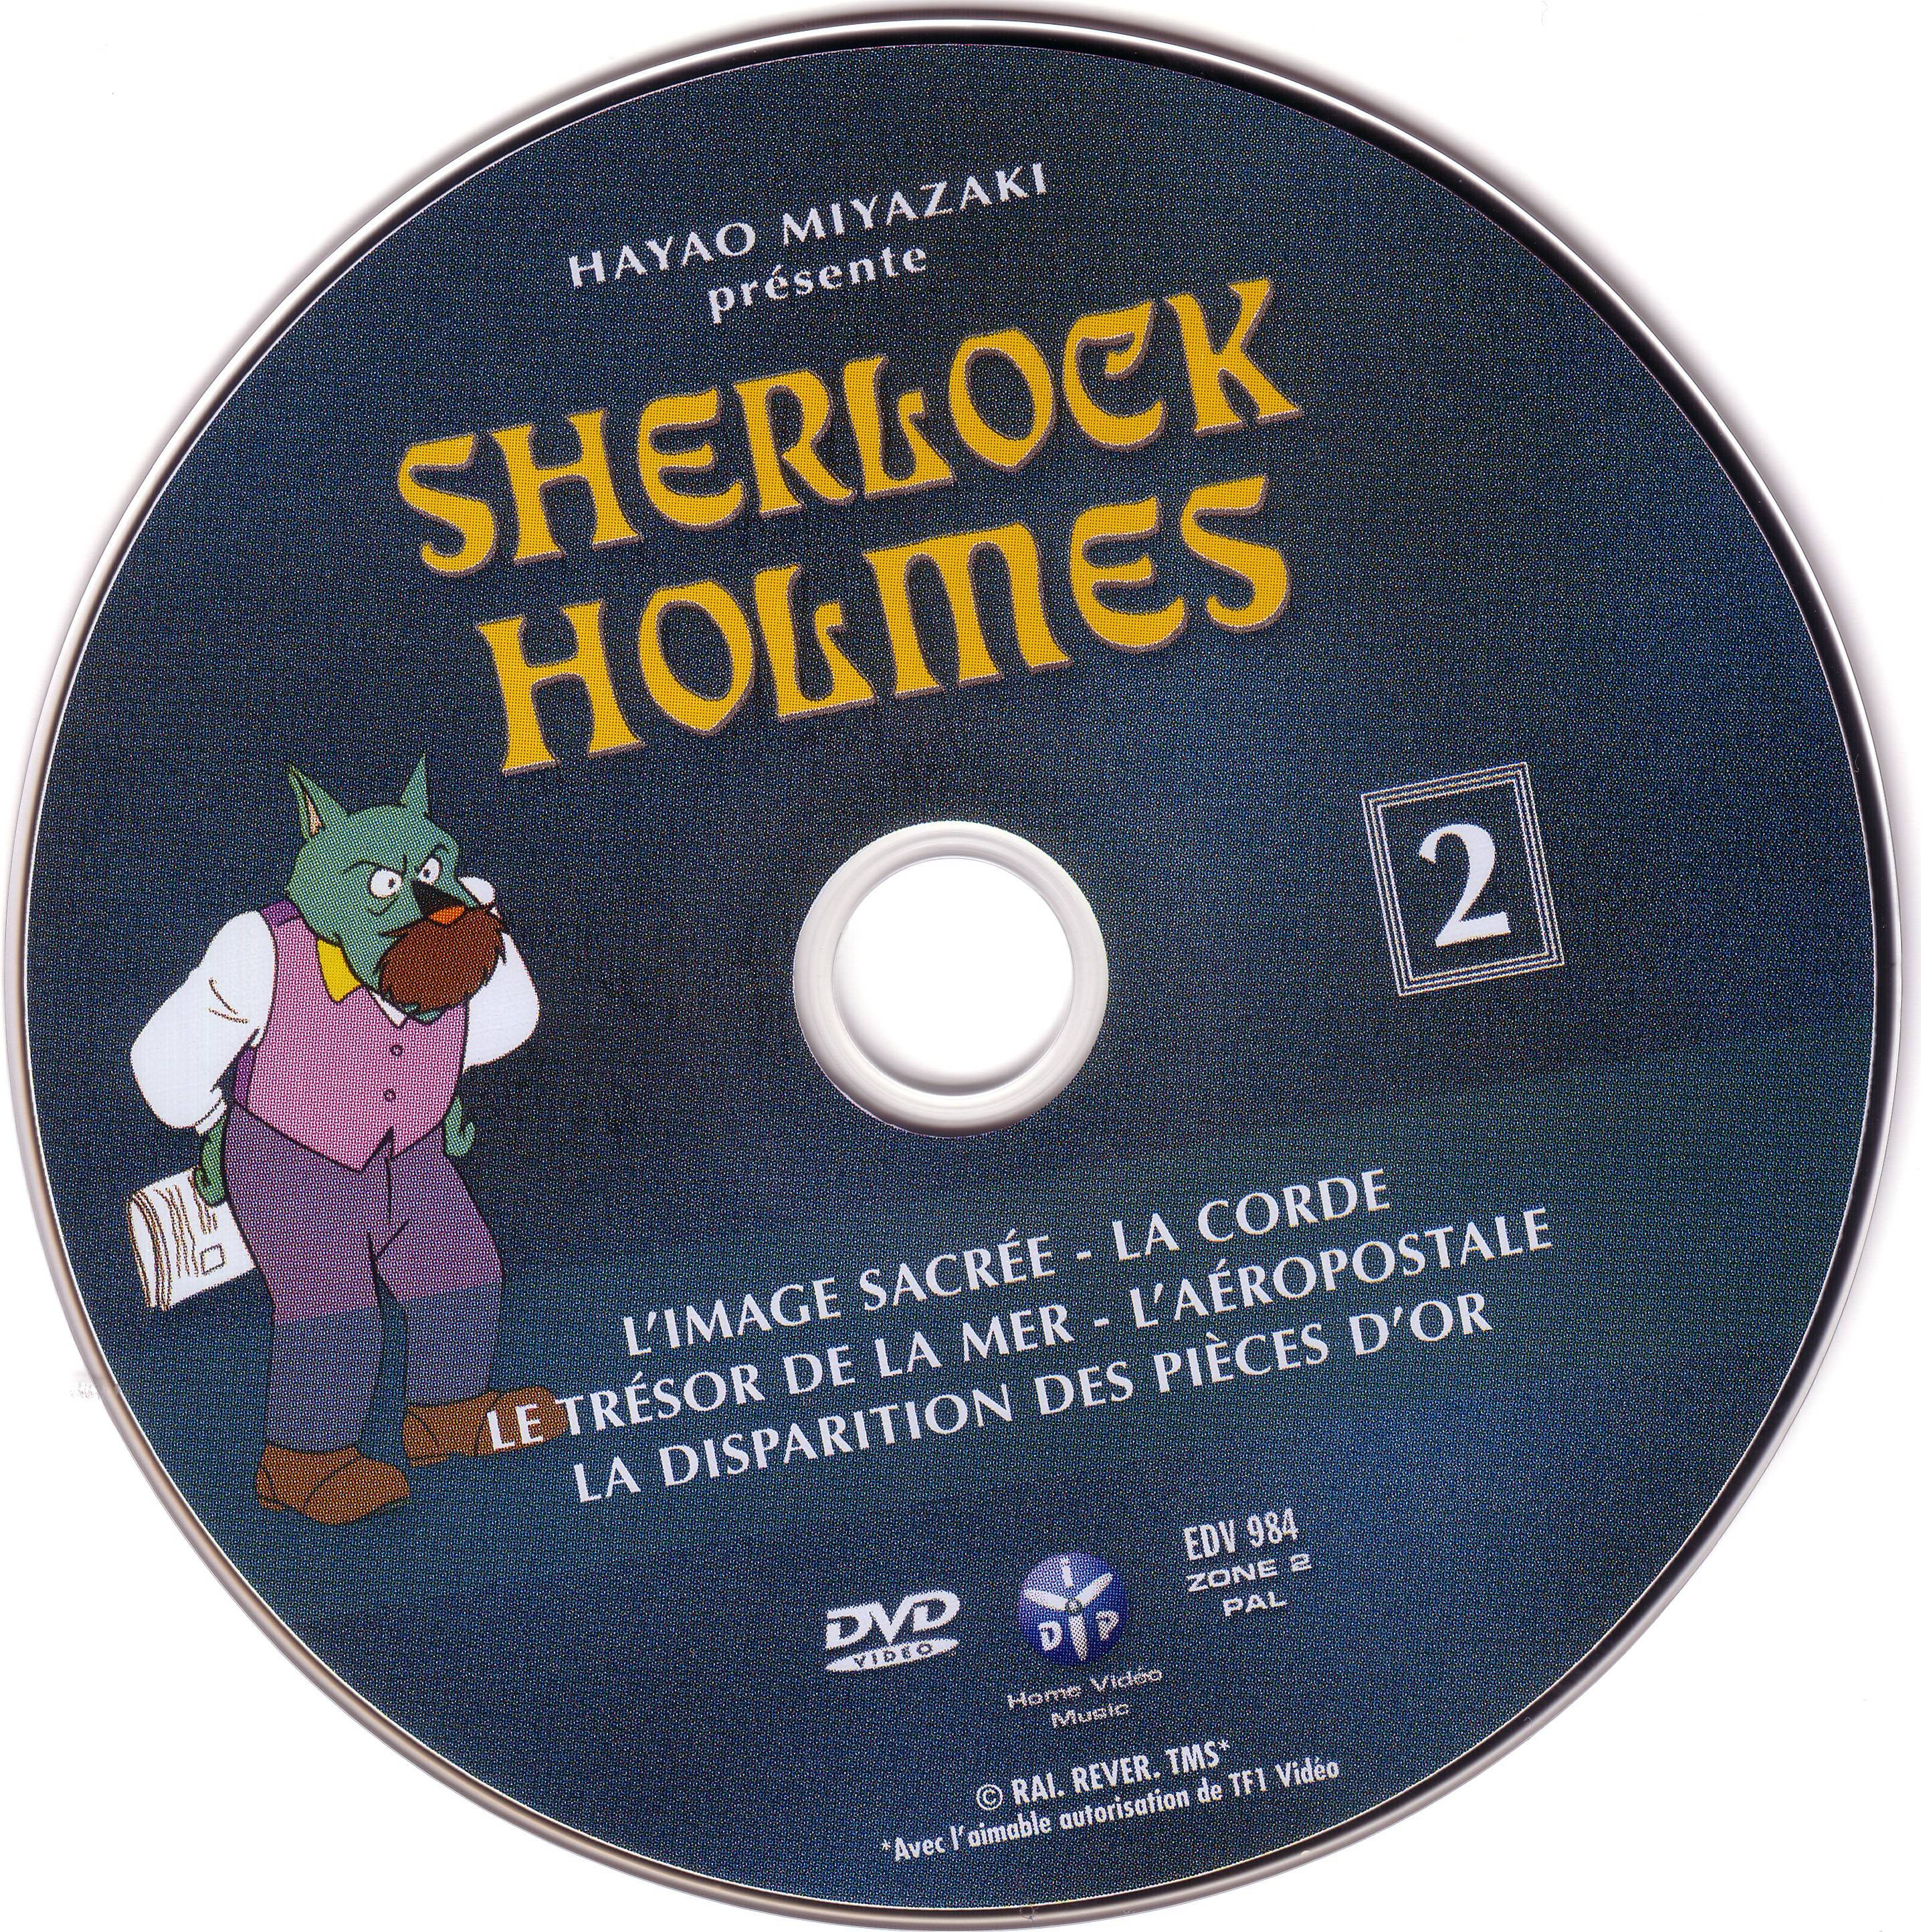 Sherlock Holmes vol 2